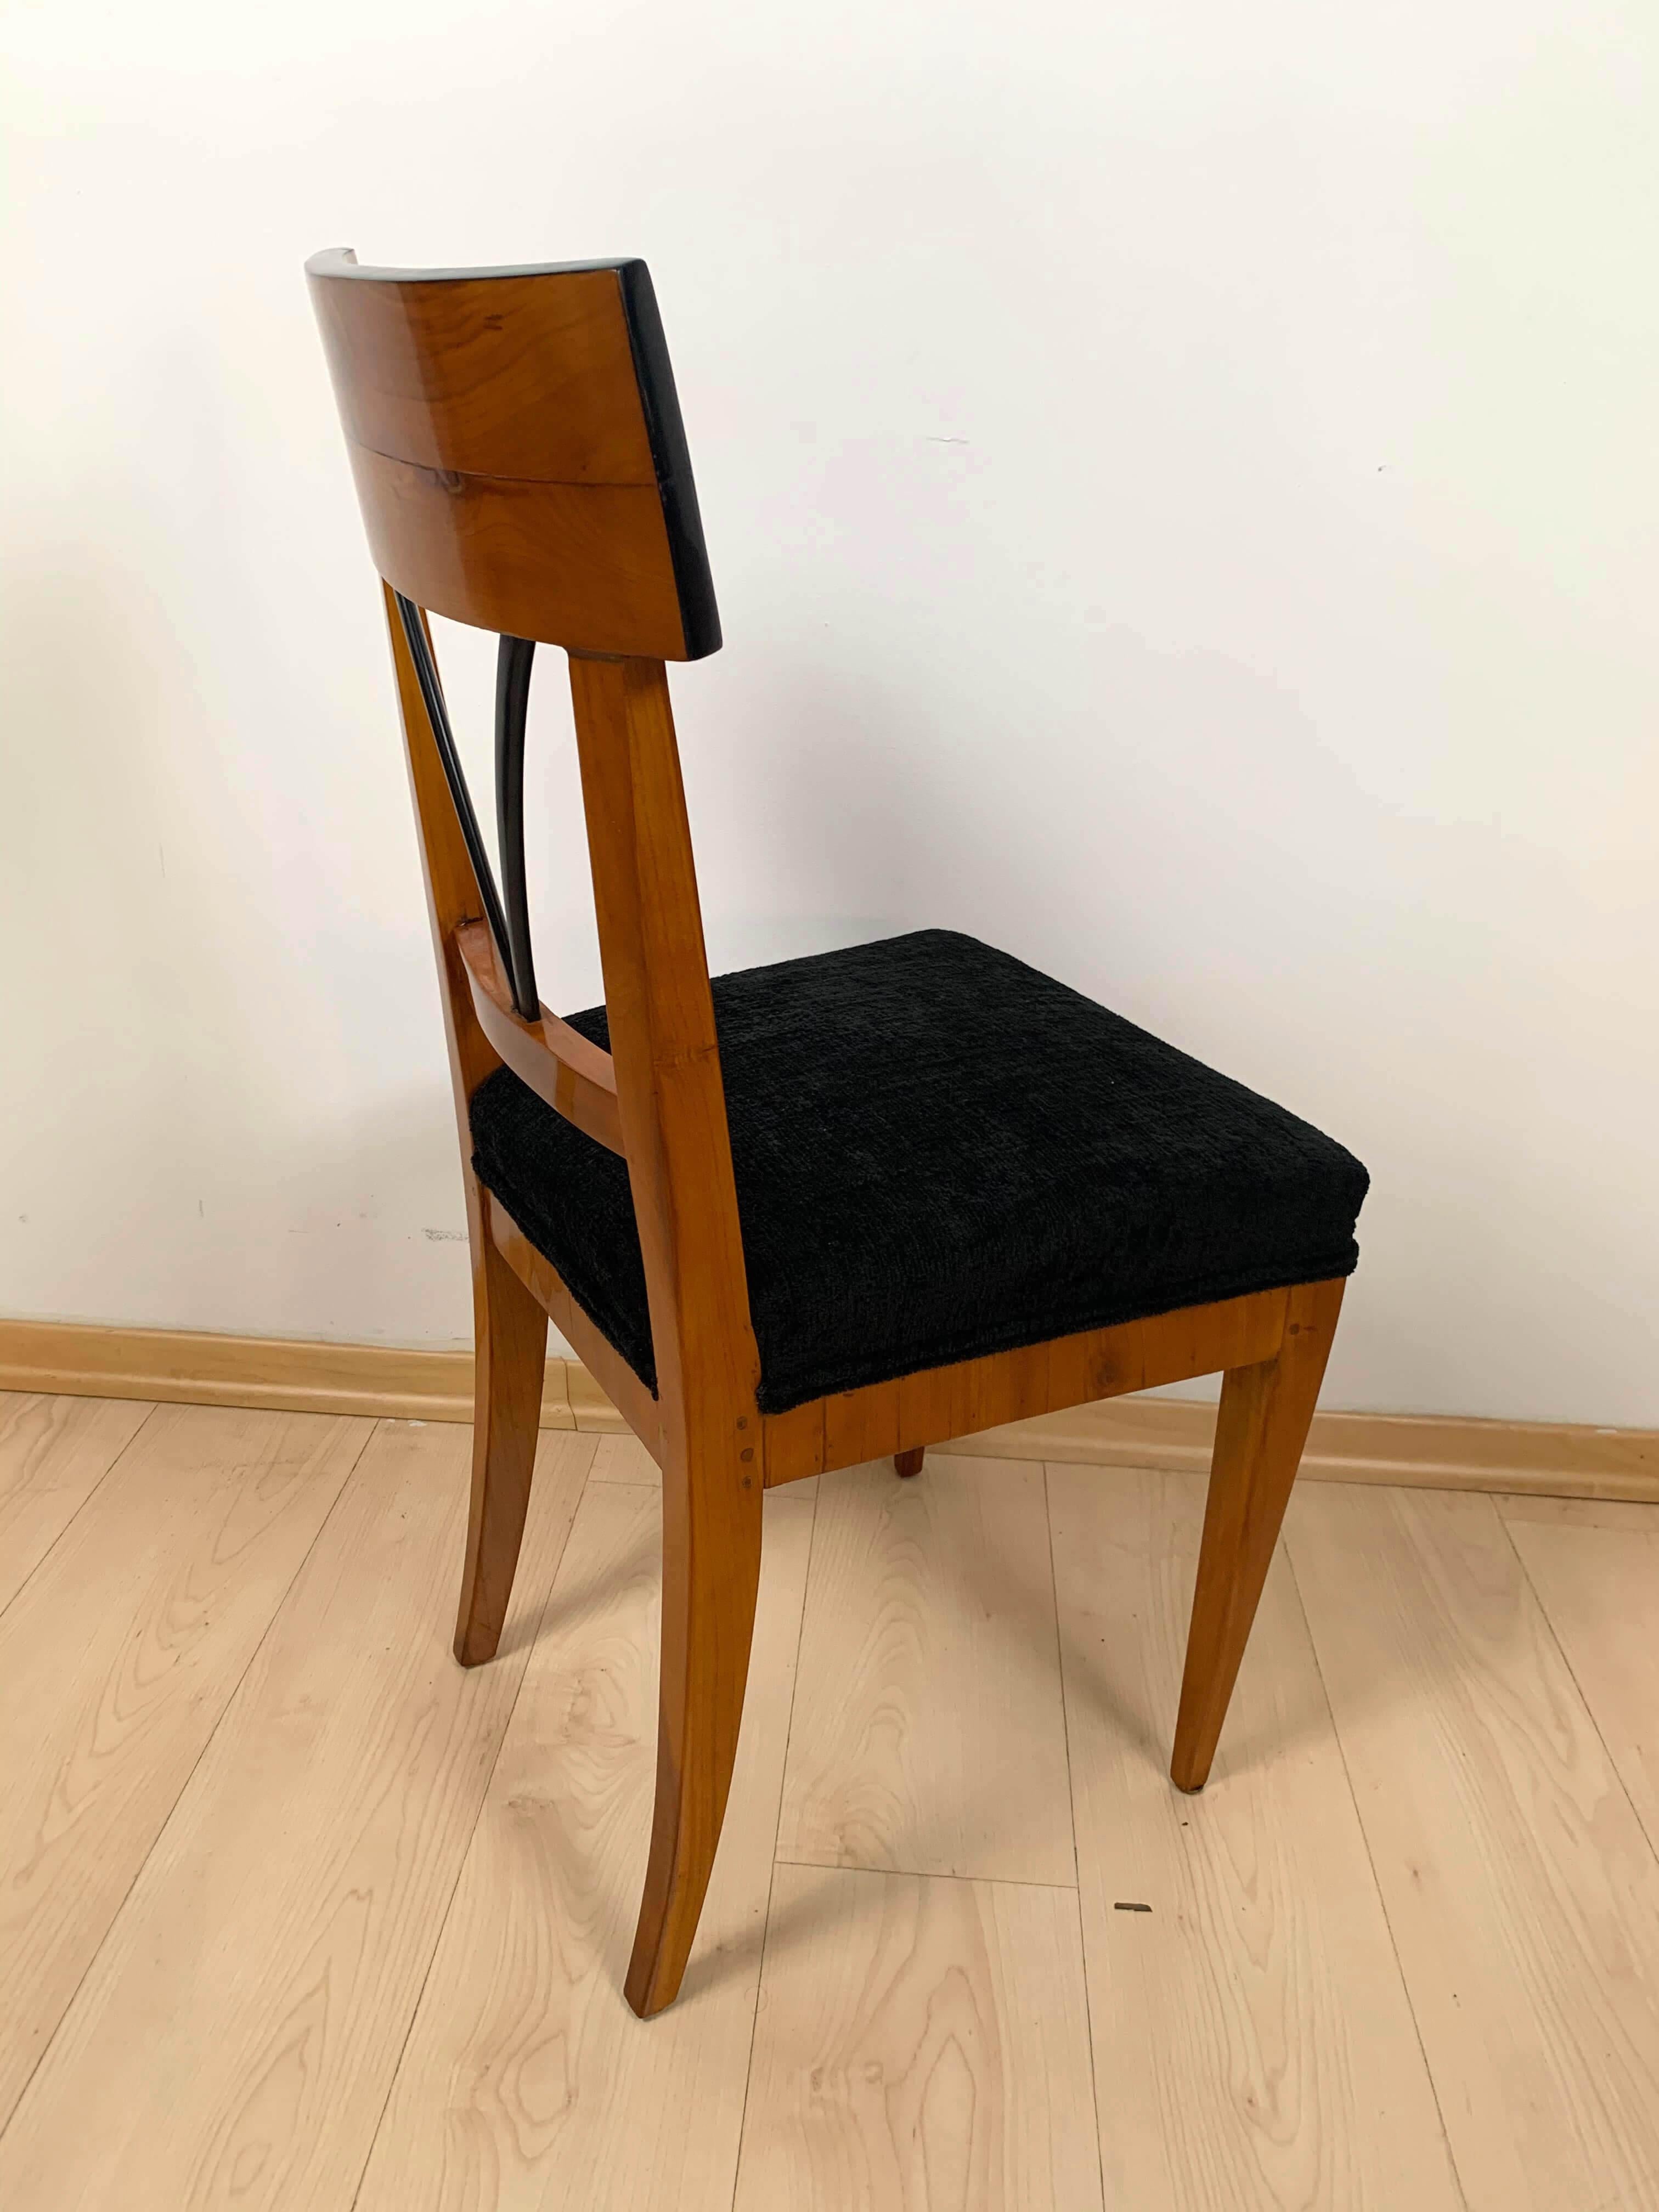 Early 19th Century Biedermeier Side Chair, Polished Cherry, Black Velvet, South Germany, circa 1820